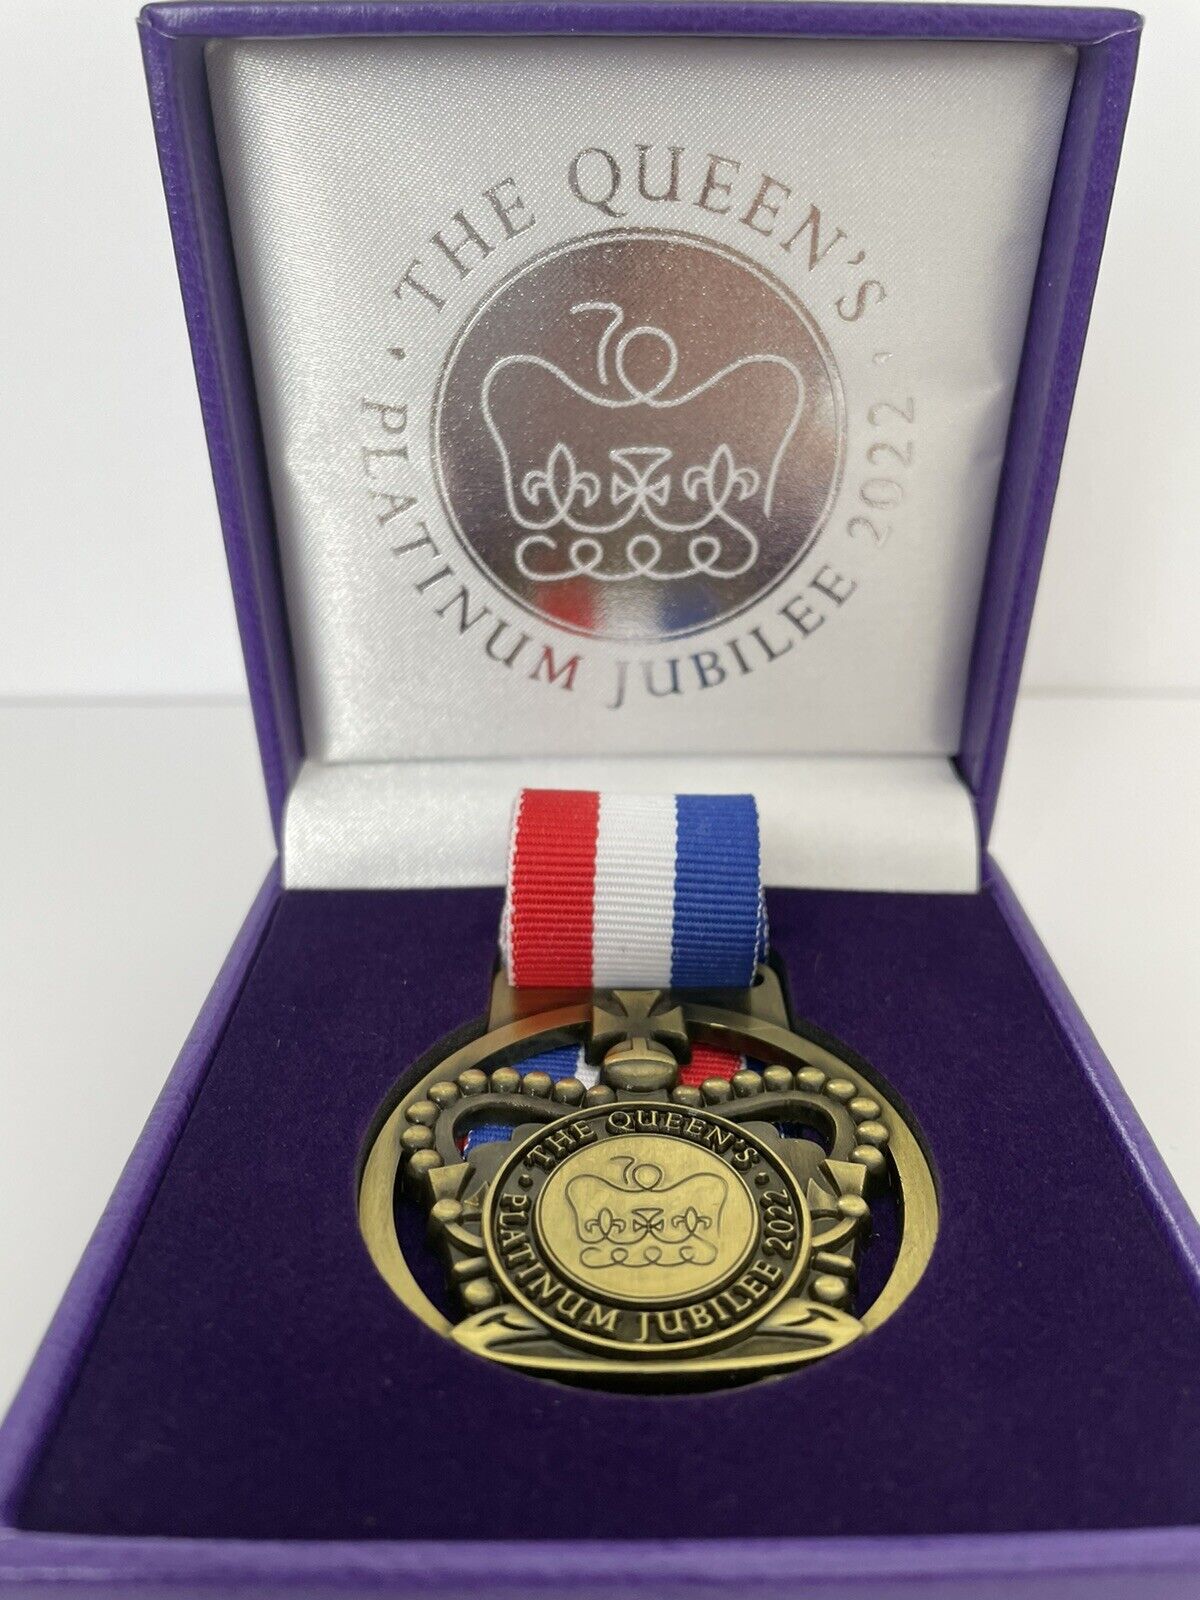 Queens Jubilee Crown Medal in Presentation case - Royal Family Memorabilia 